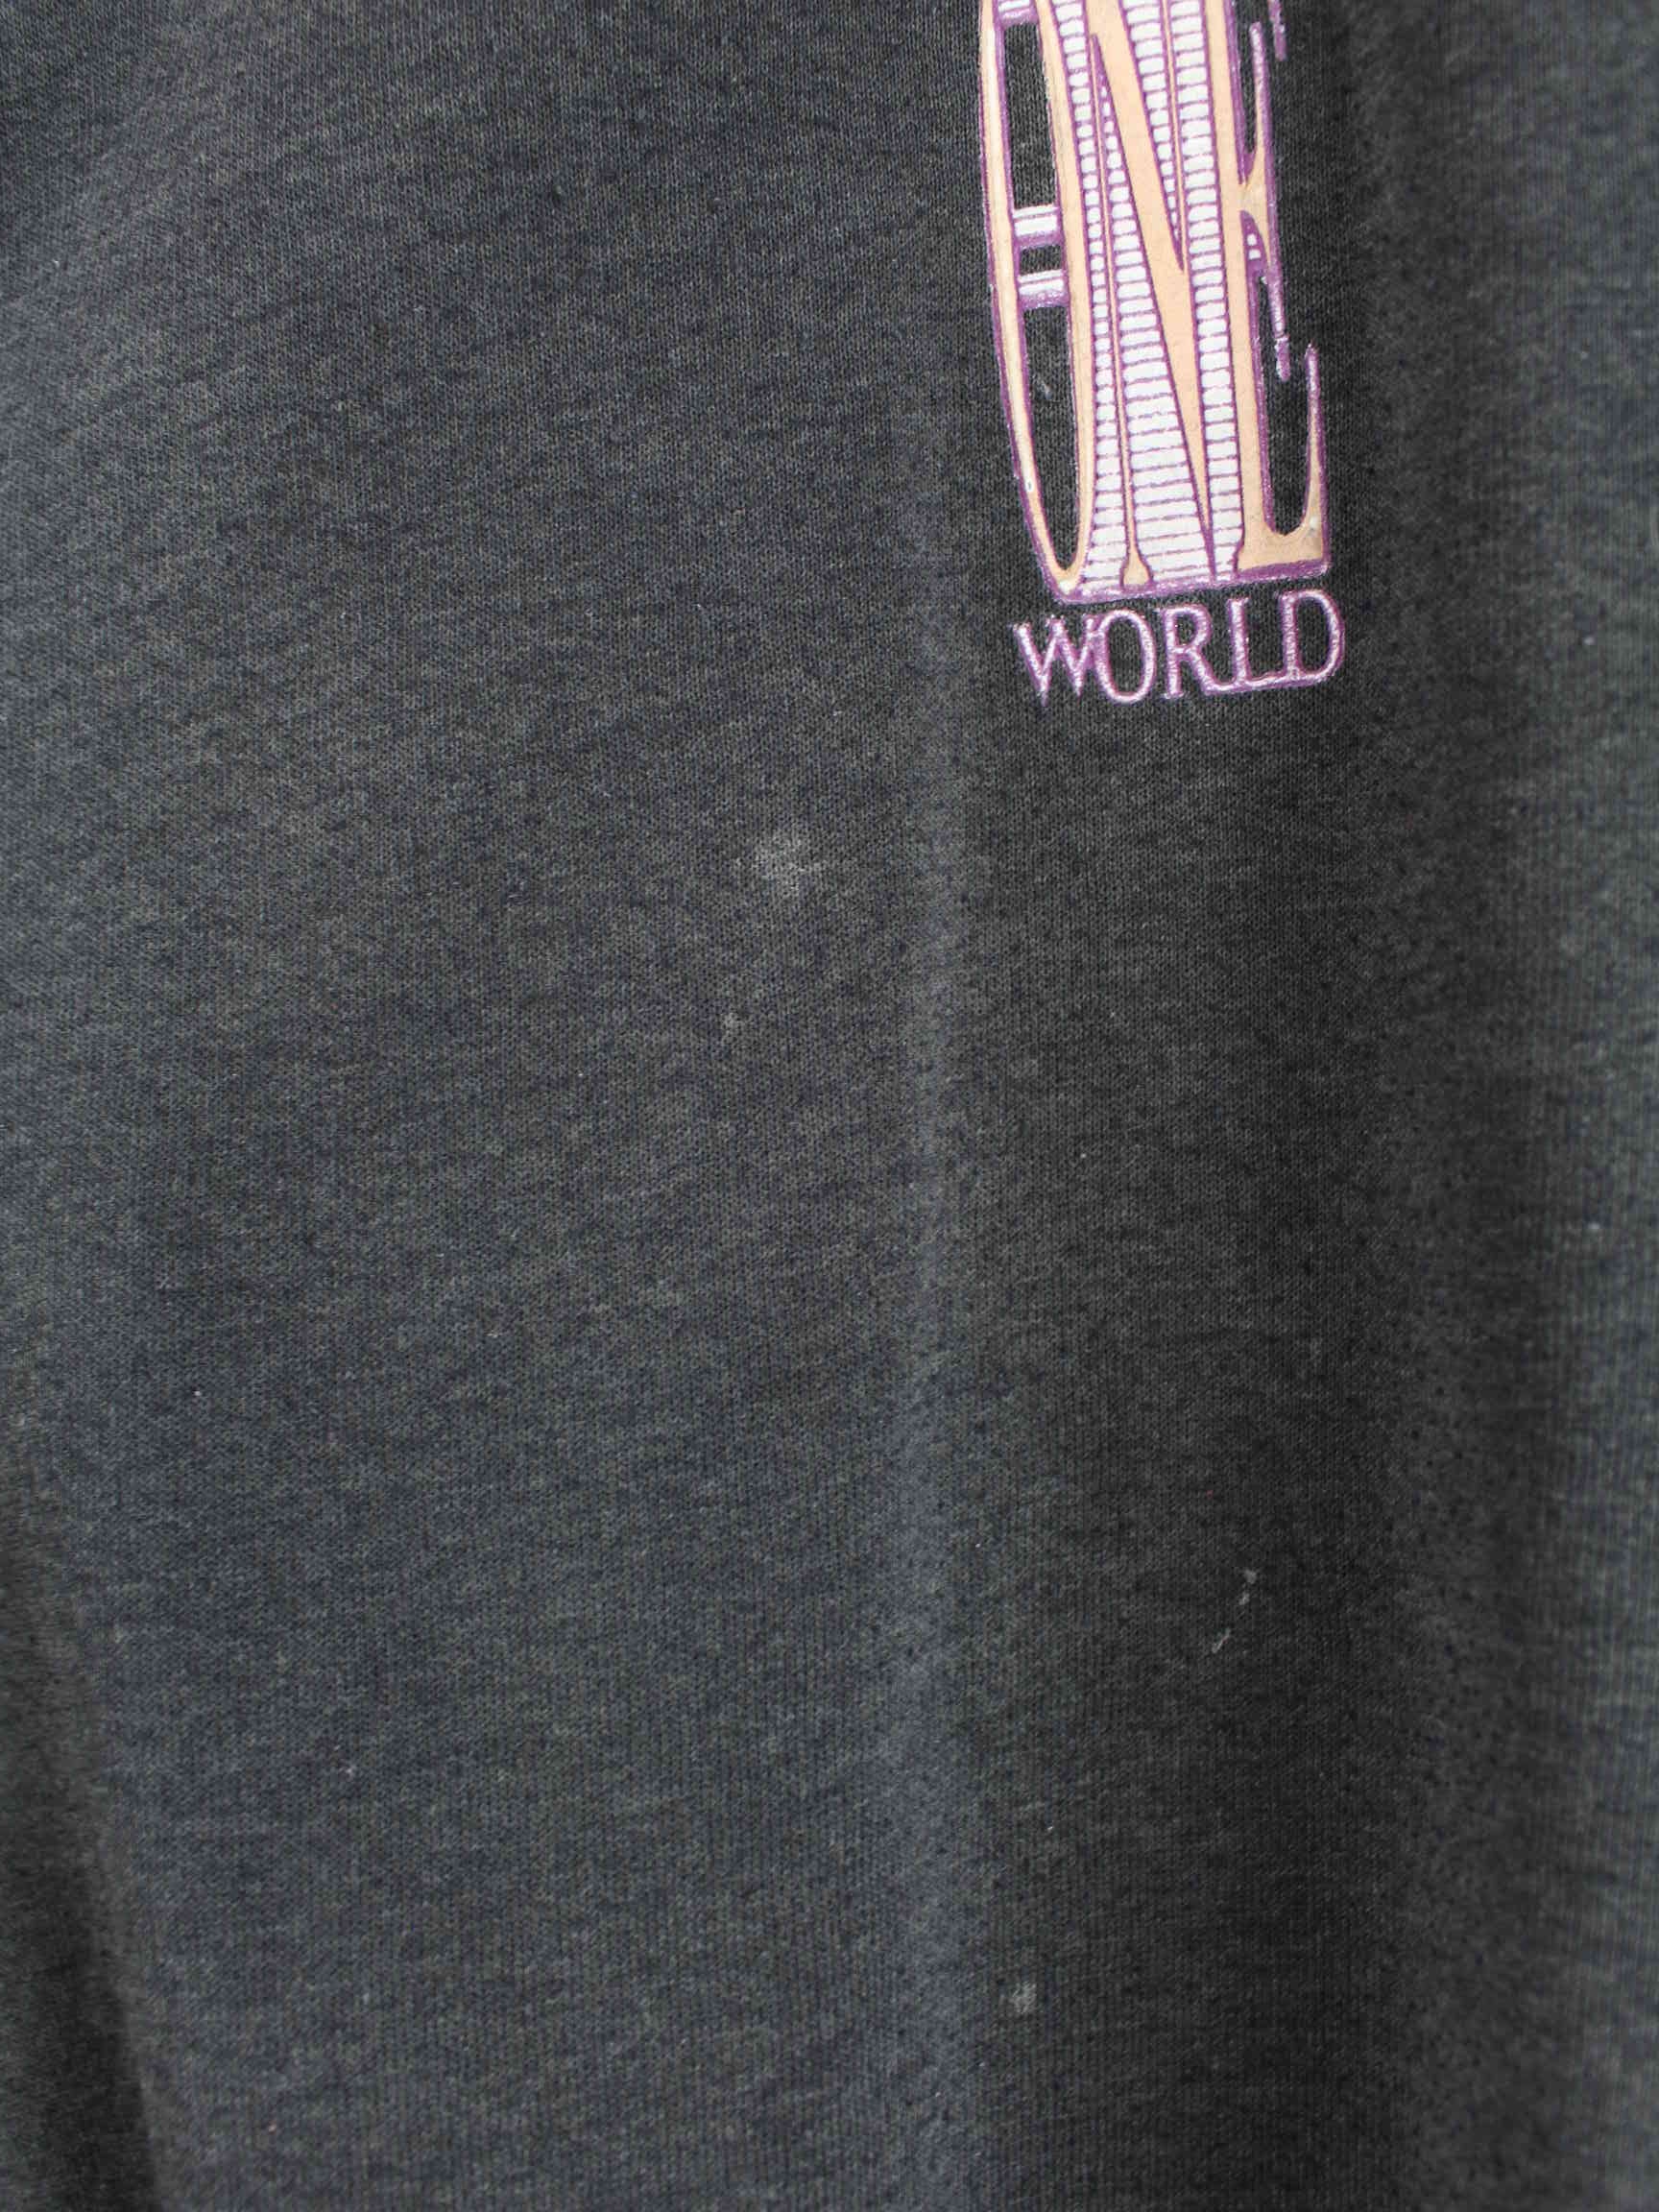 Adidas 80s Vintage One World Sweater Grau M (detail image 3)